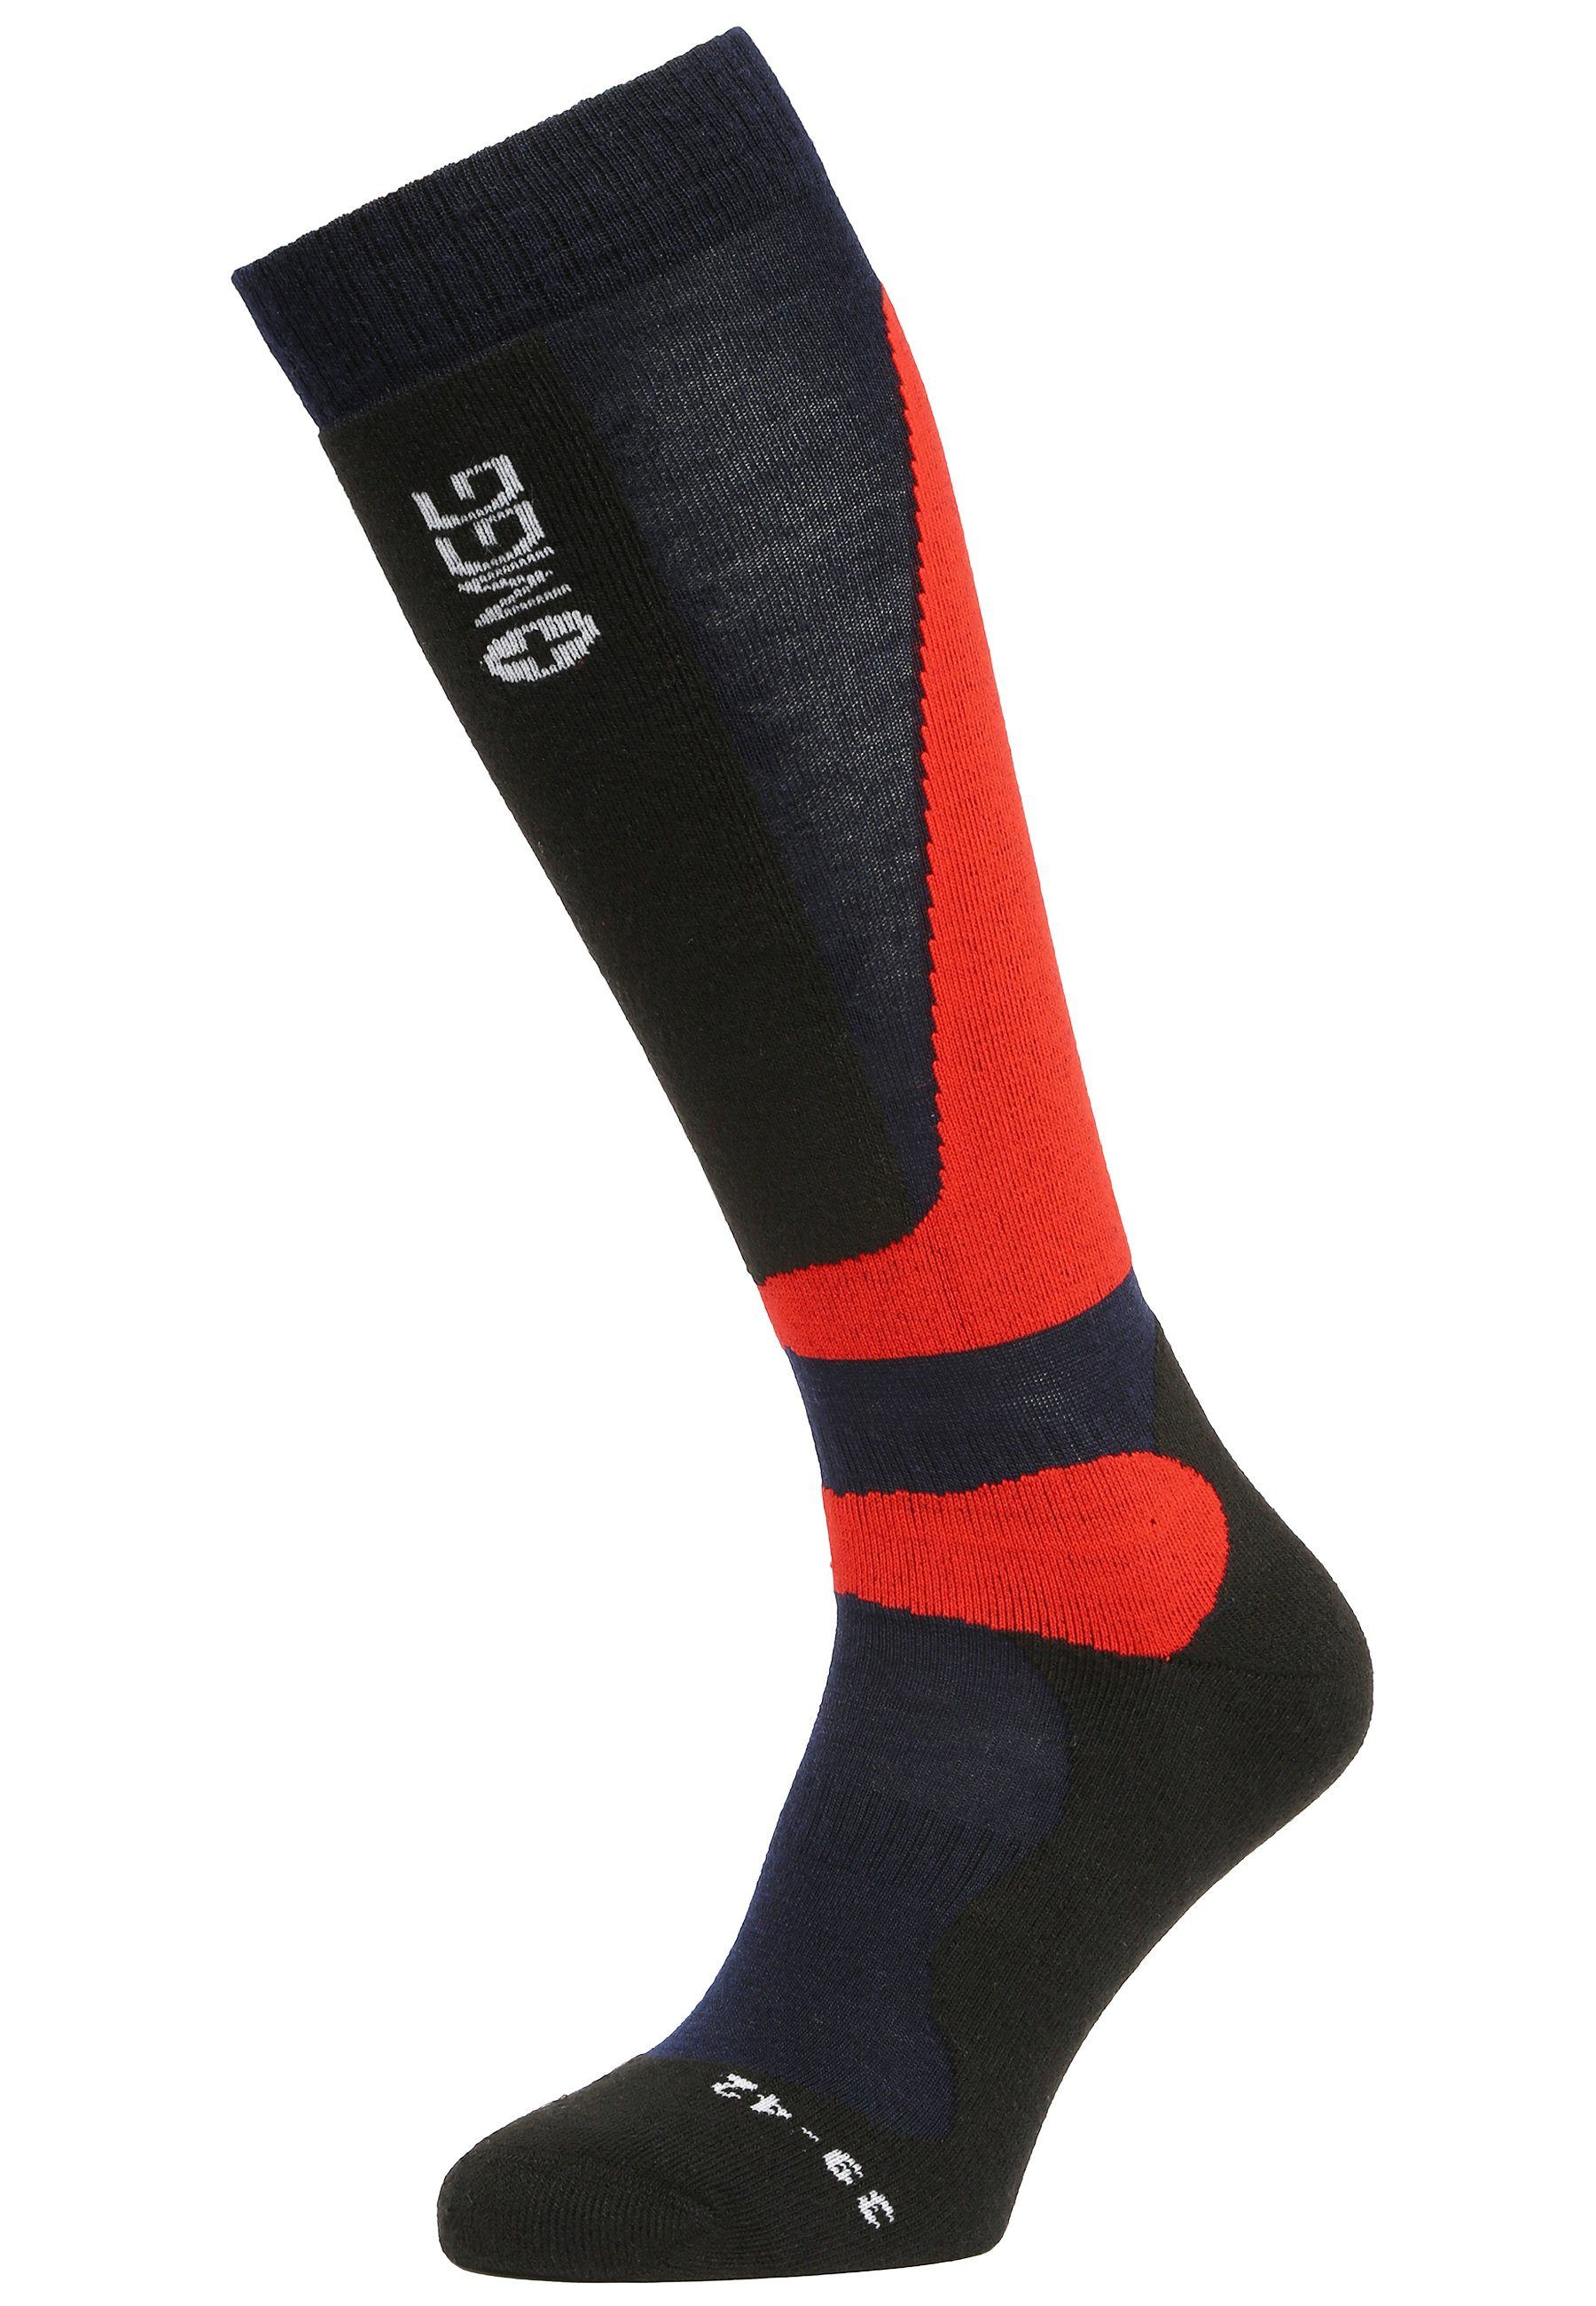 MGG Socken »Technical Ski Socks« online kaufen | OTTO